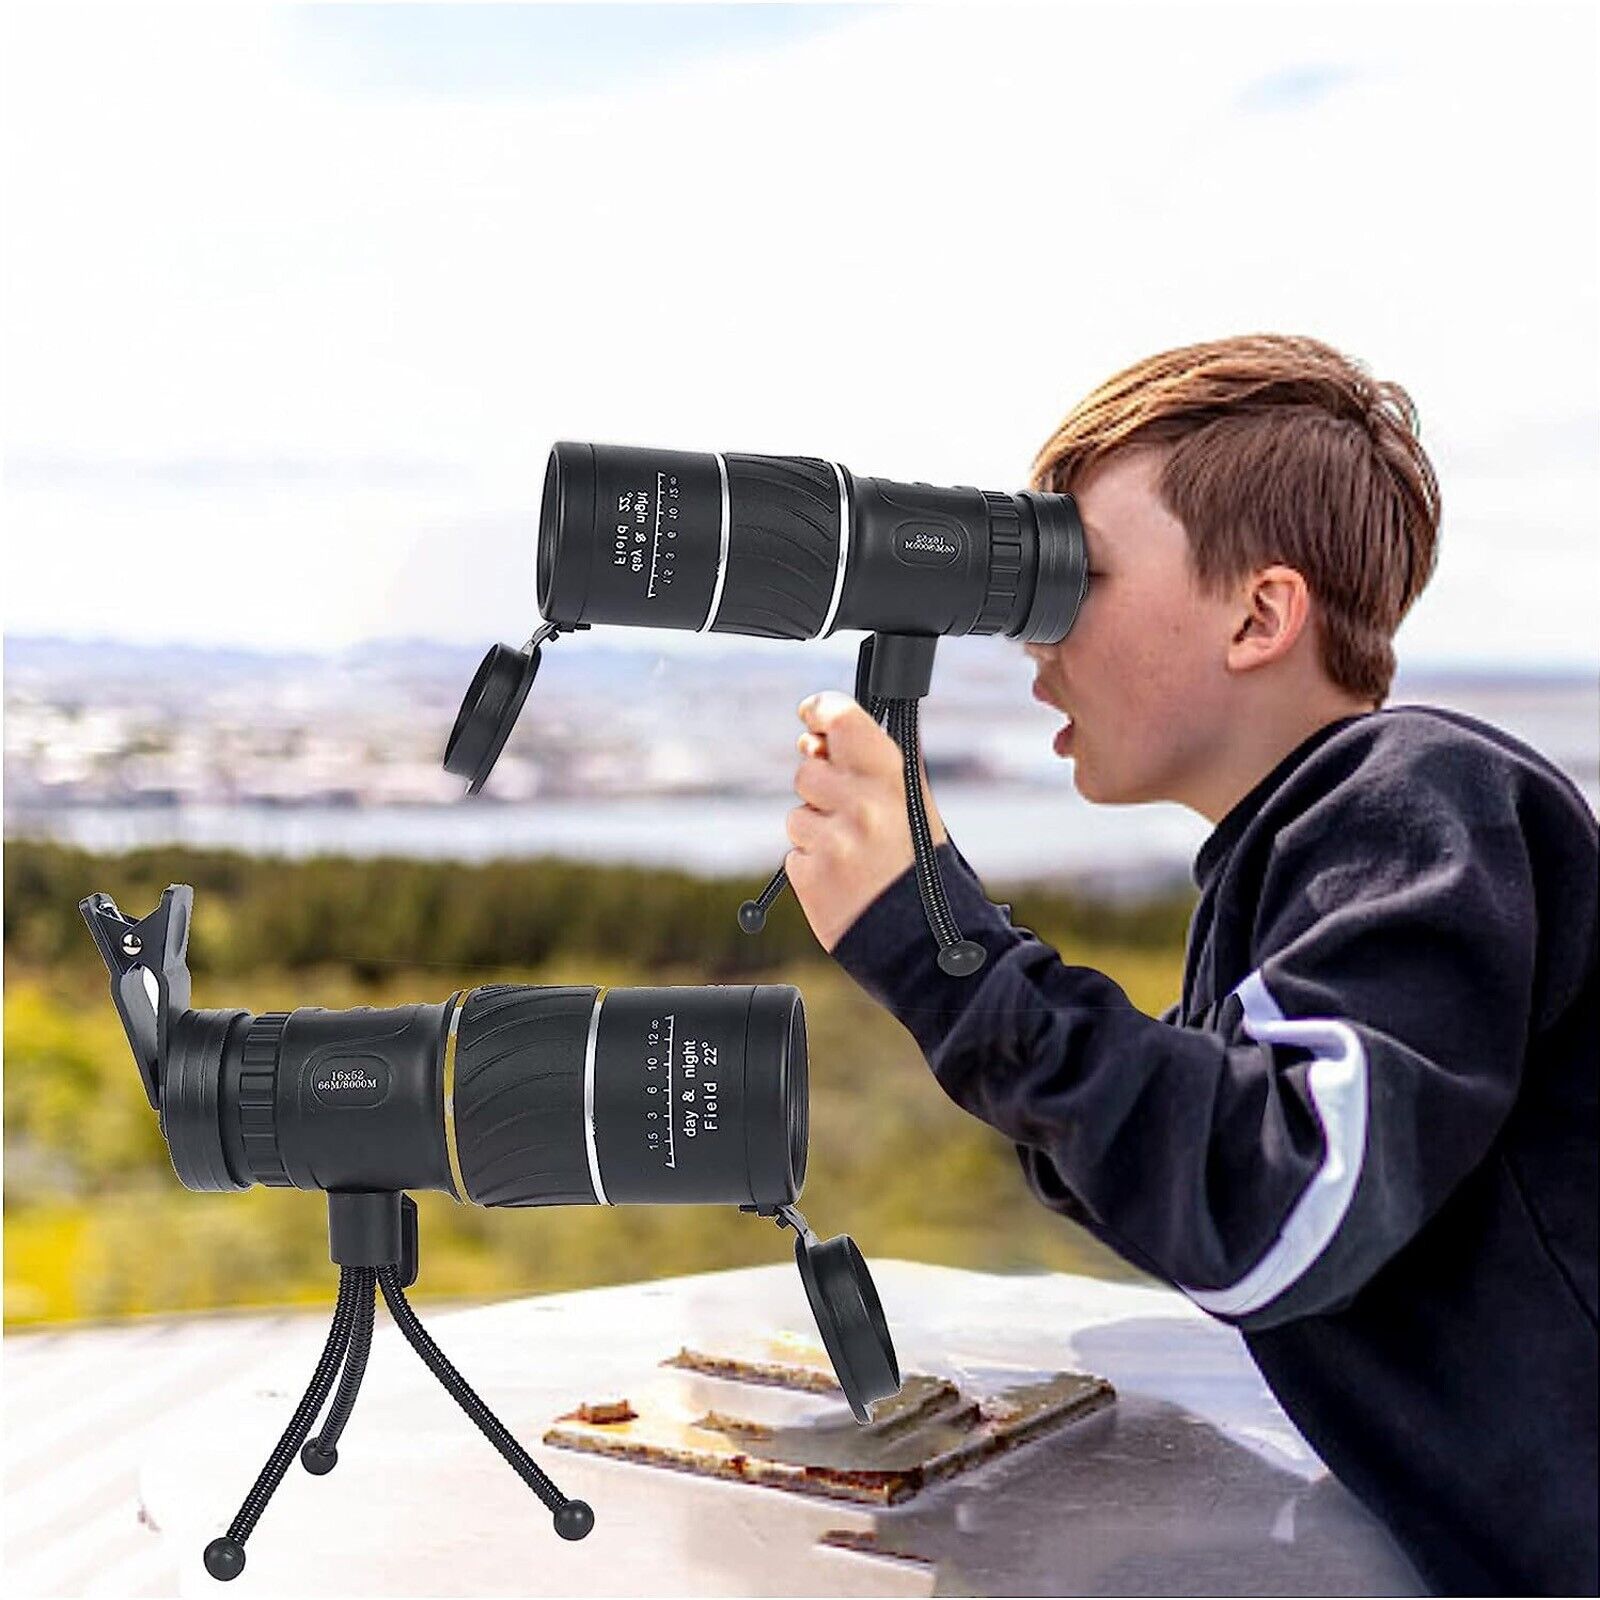 Binocular Case for Hunting Long Telephoto Lens 16x52 High Power Monocular